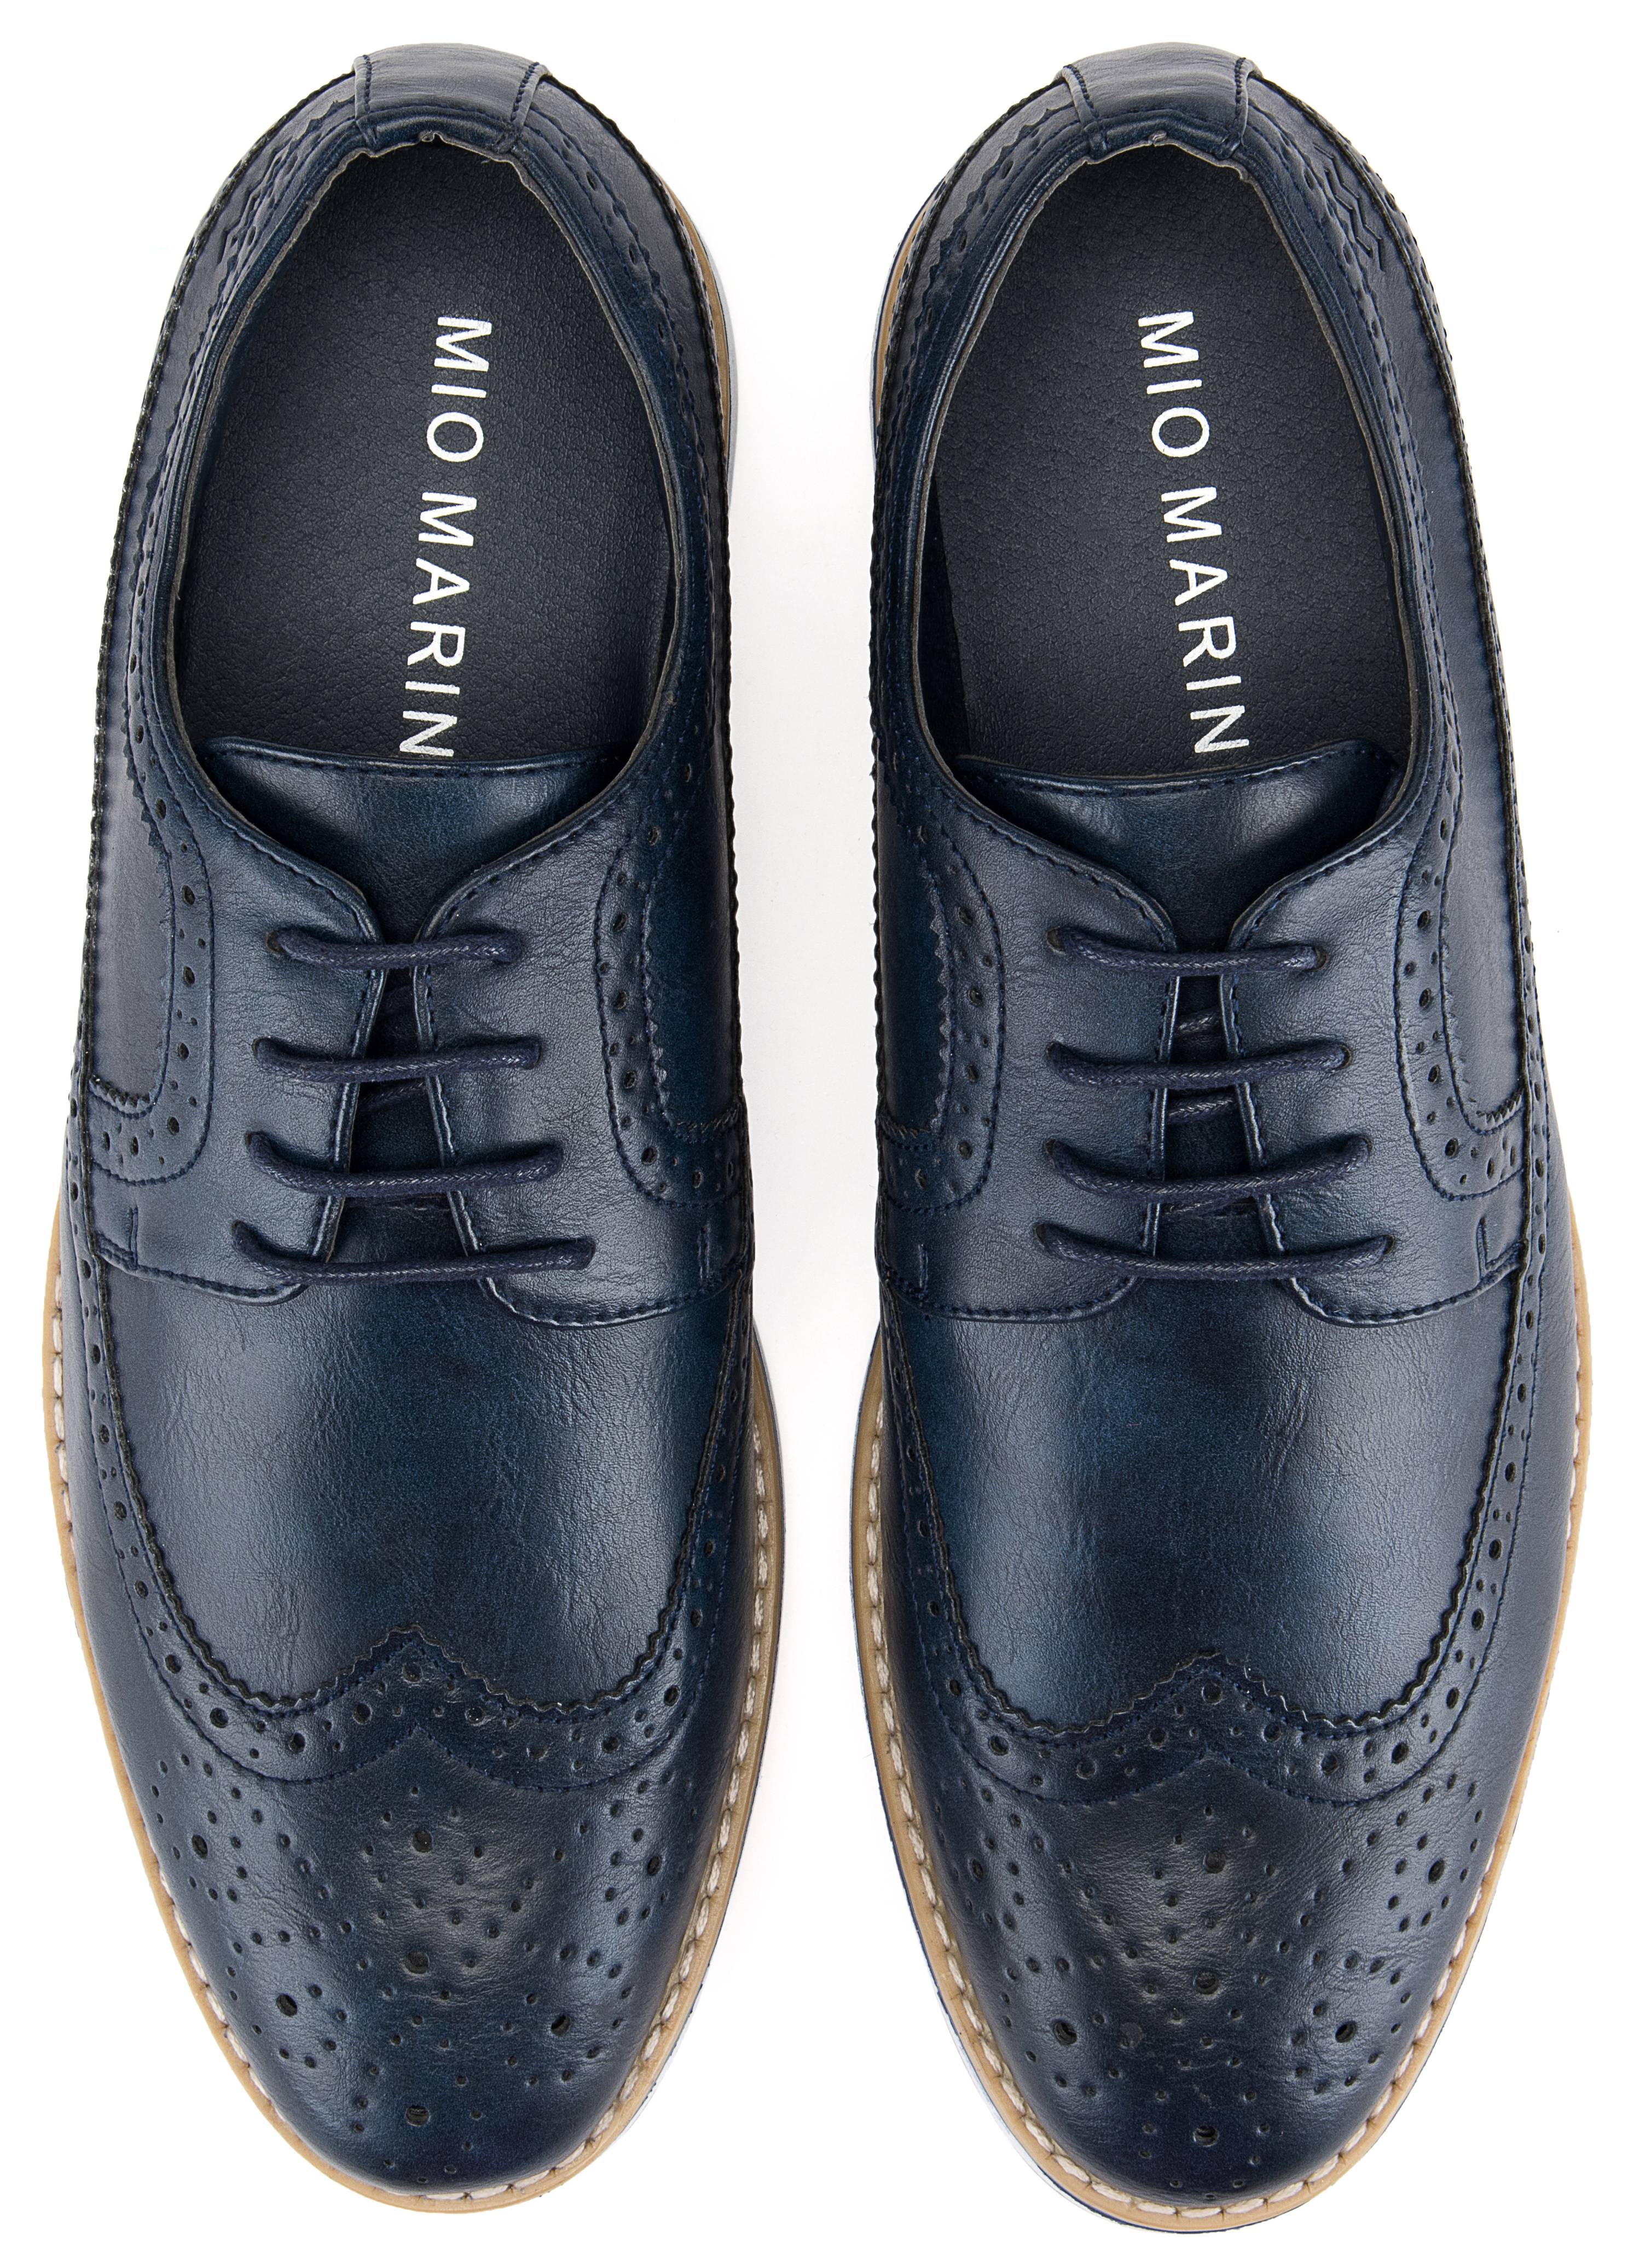 Mio Marino Classic Wingtip Oxford Dress Shoes for Men w/ Elegant Shoe Bag - image 4 of 7